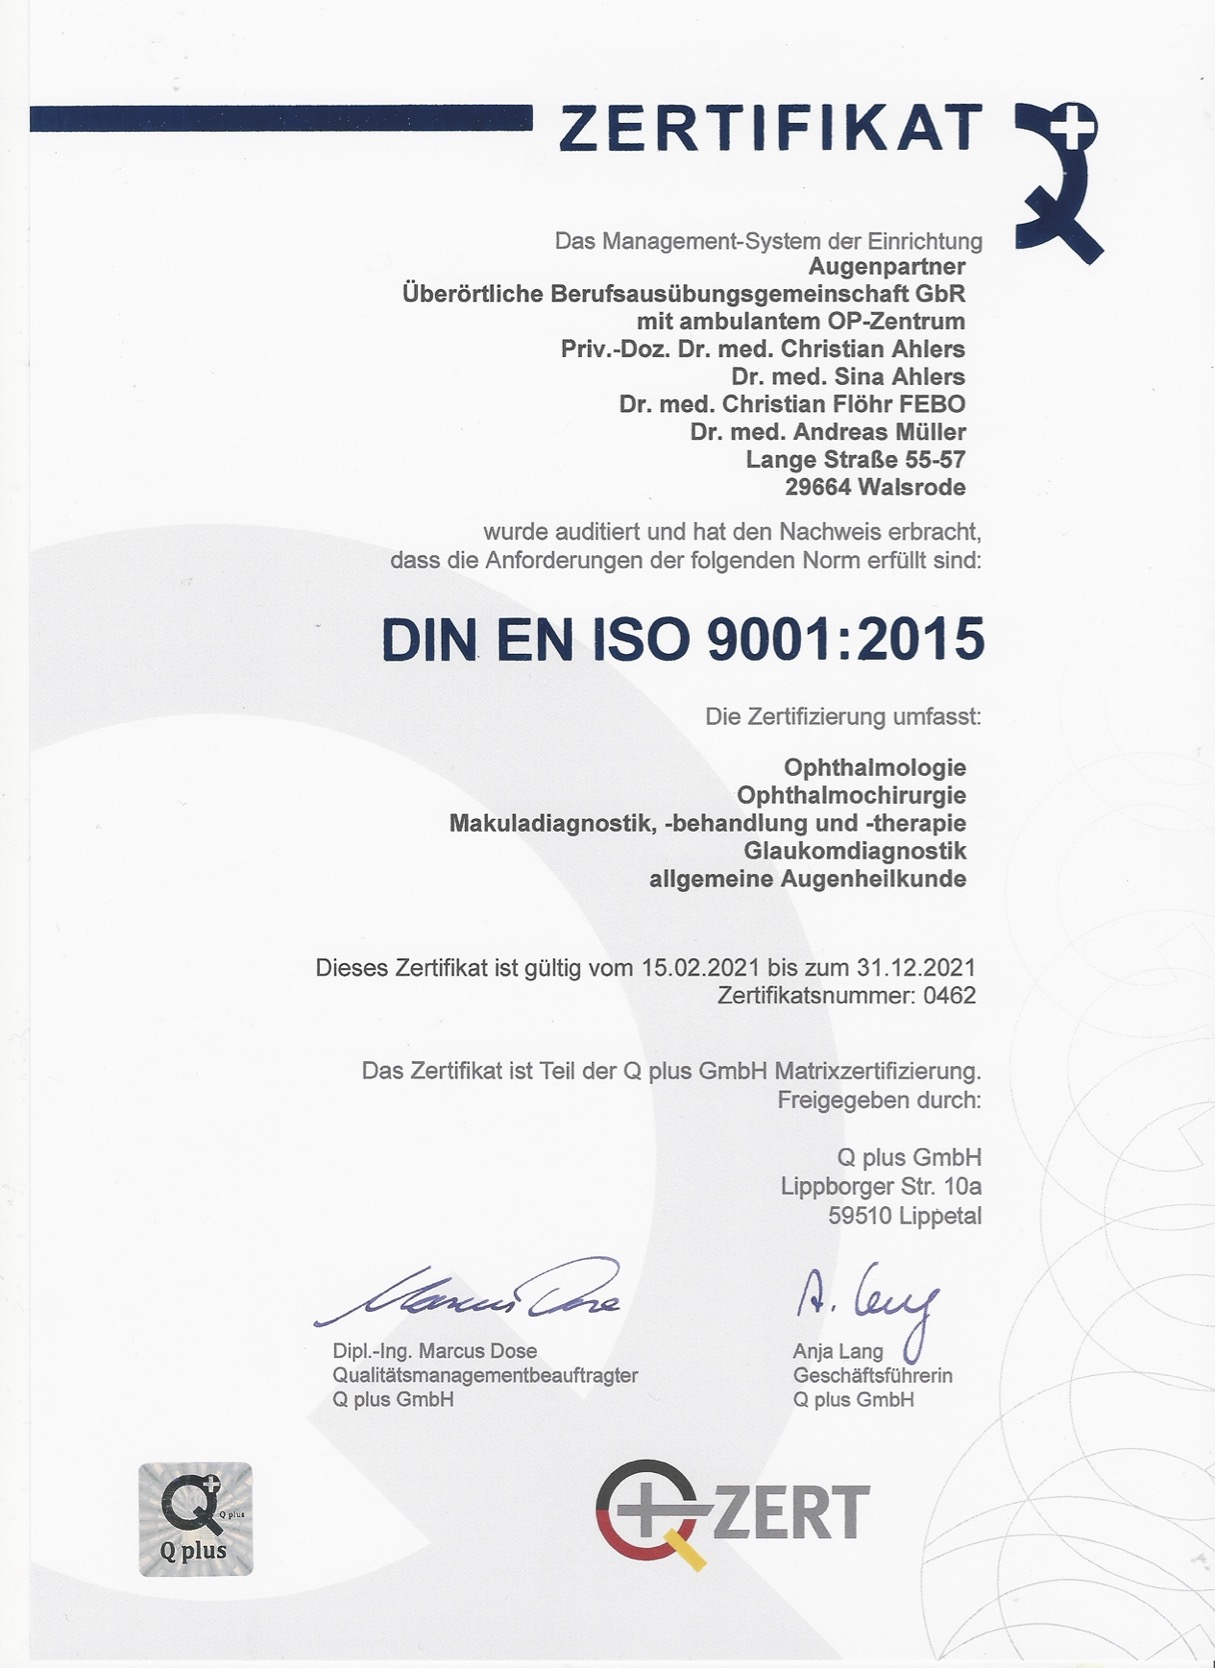 Zertifikat der Augenpartner Walsrode über DIN ISO 9001